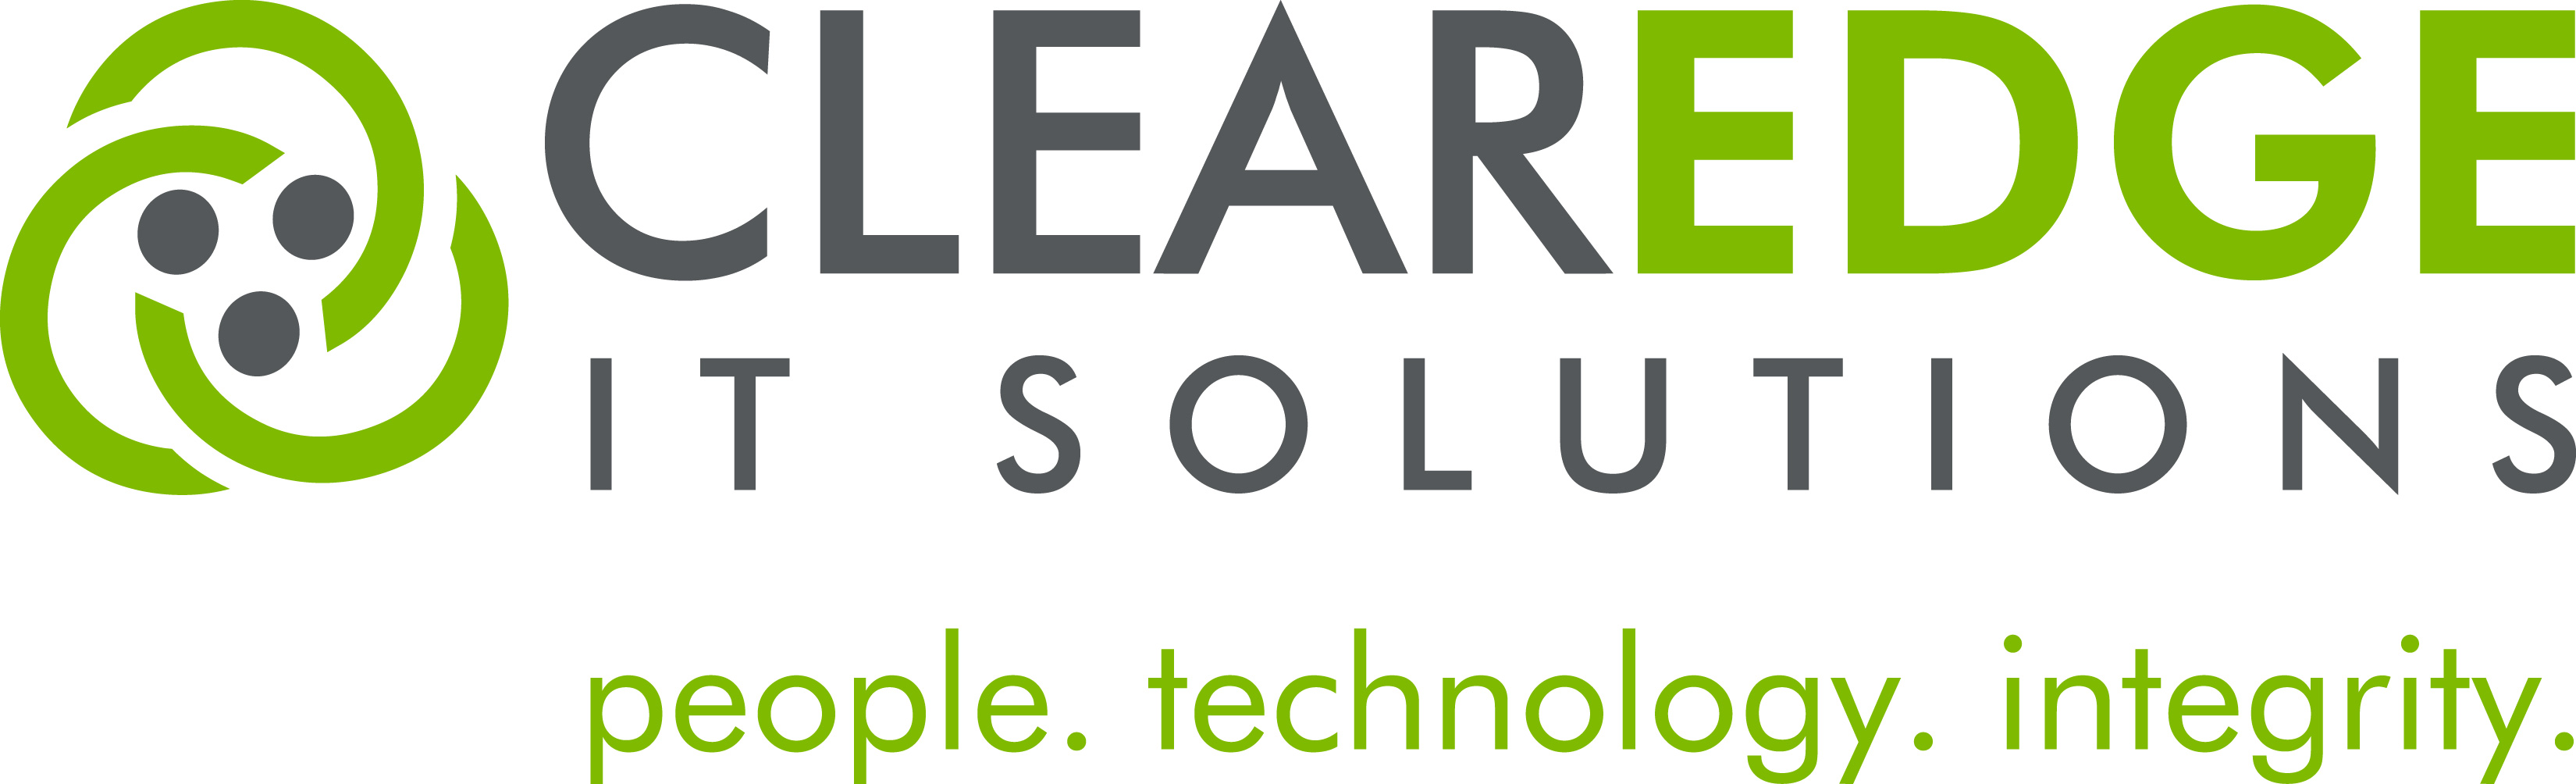 Clearedge IT Solutions, LLC